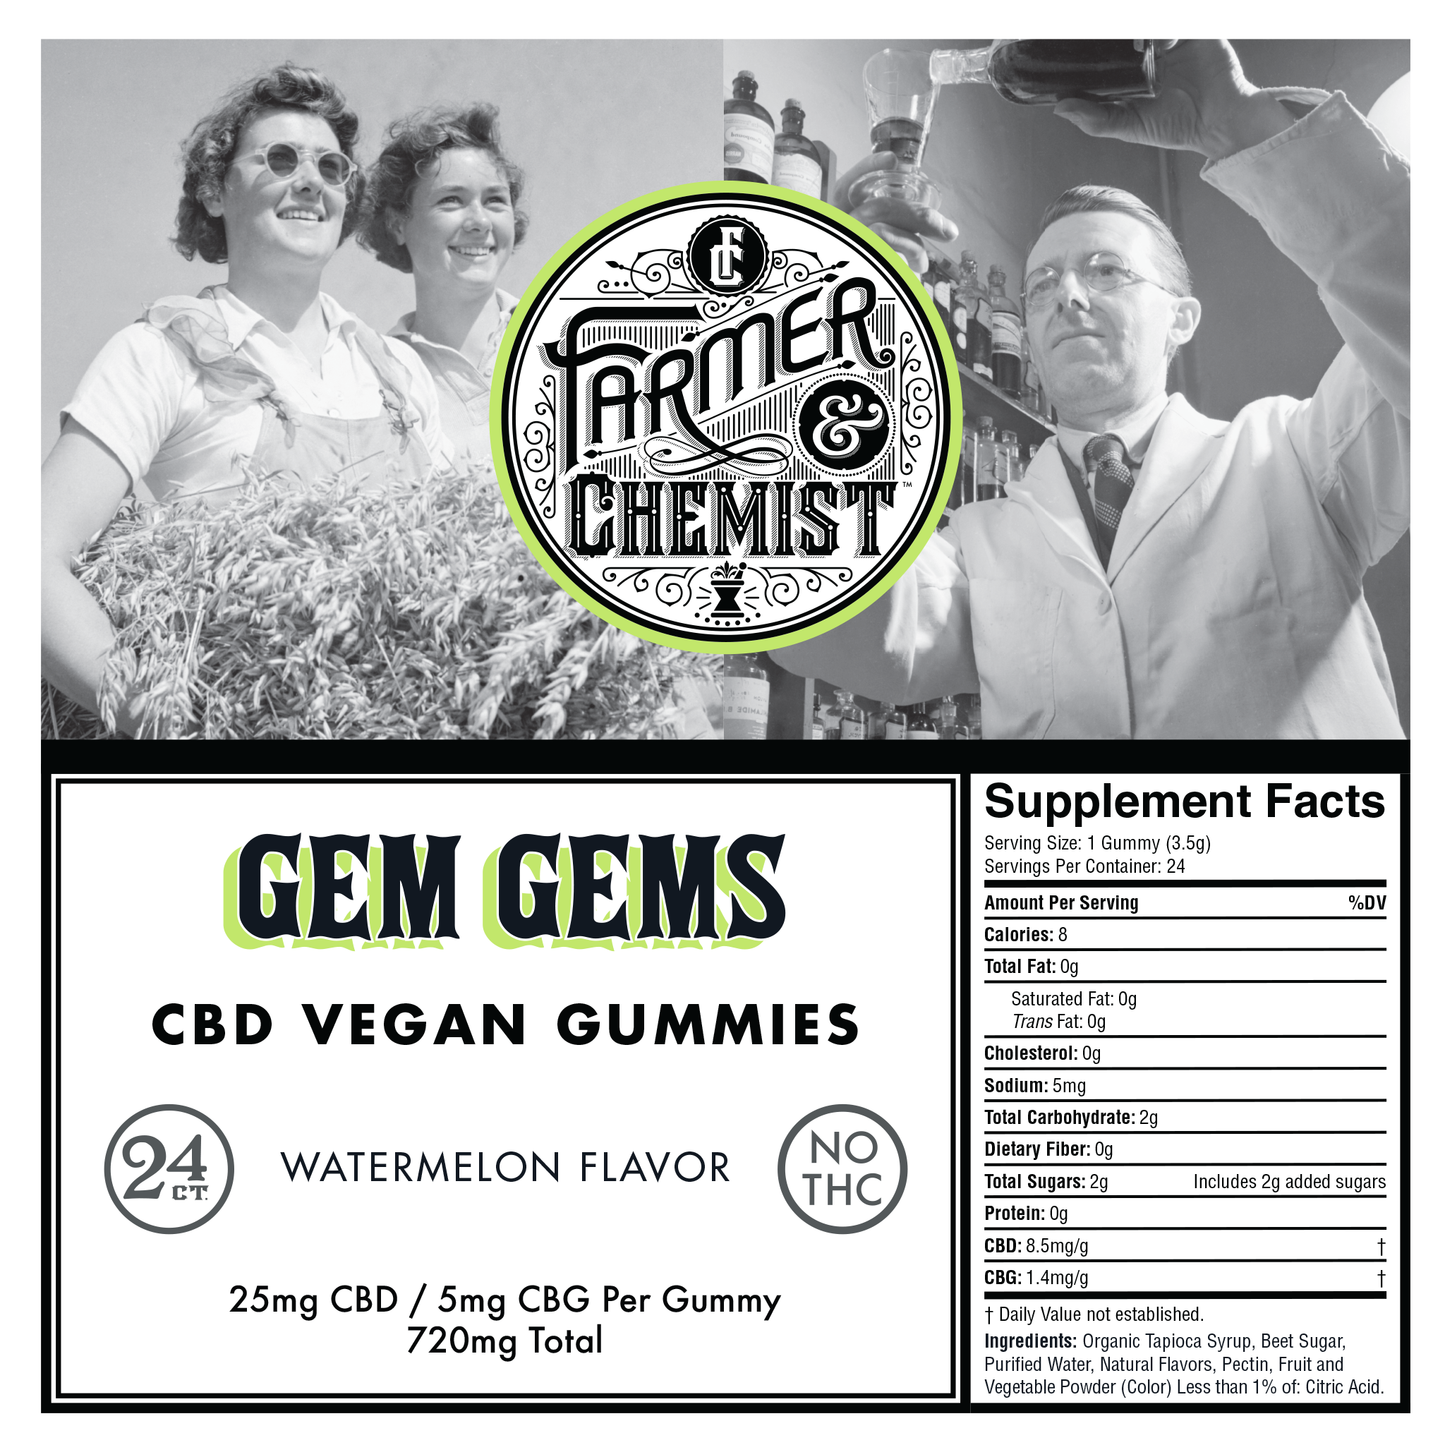 GEM GEMS - 24ct 25mg CBD / 5mg CBG Watermelon Flavor